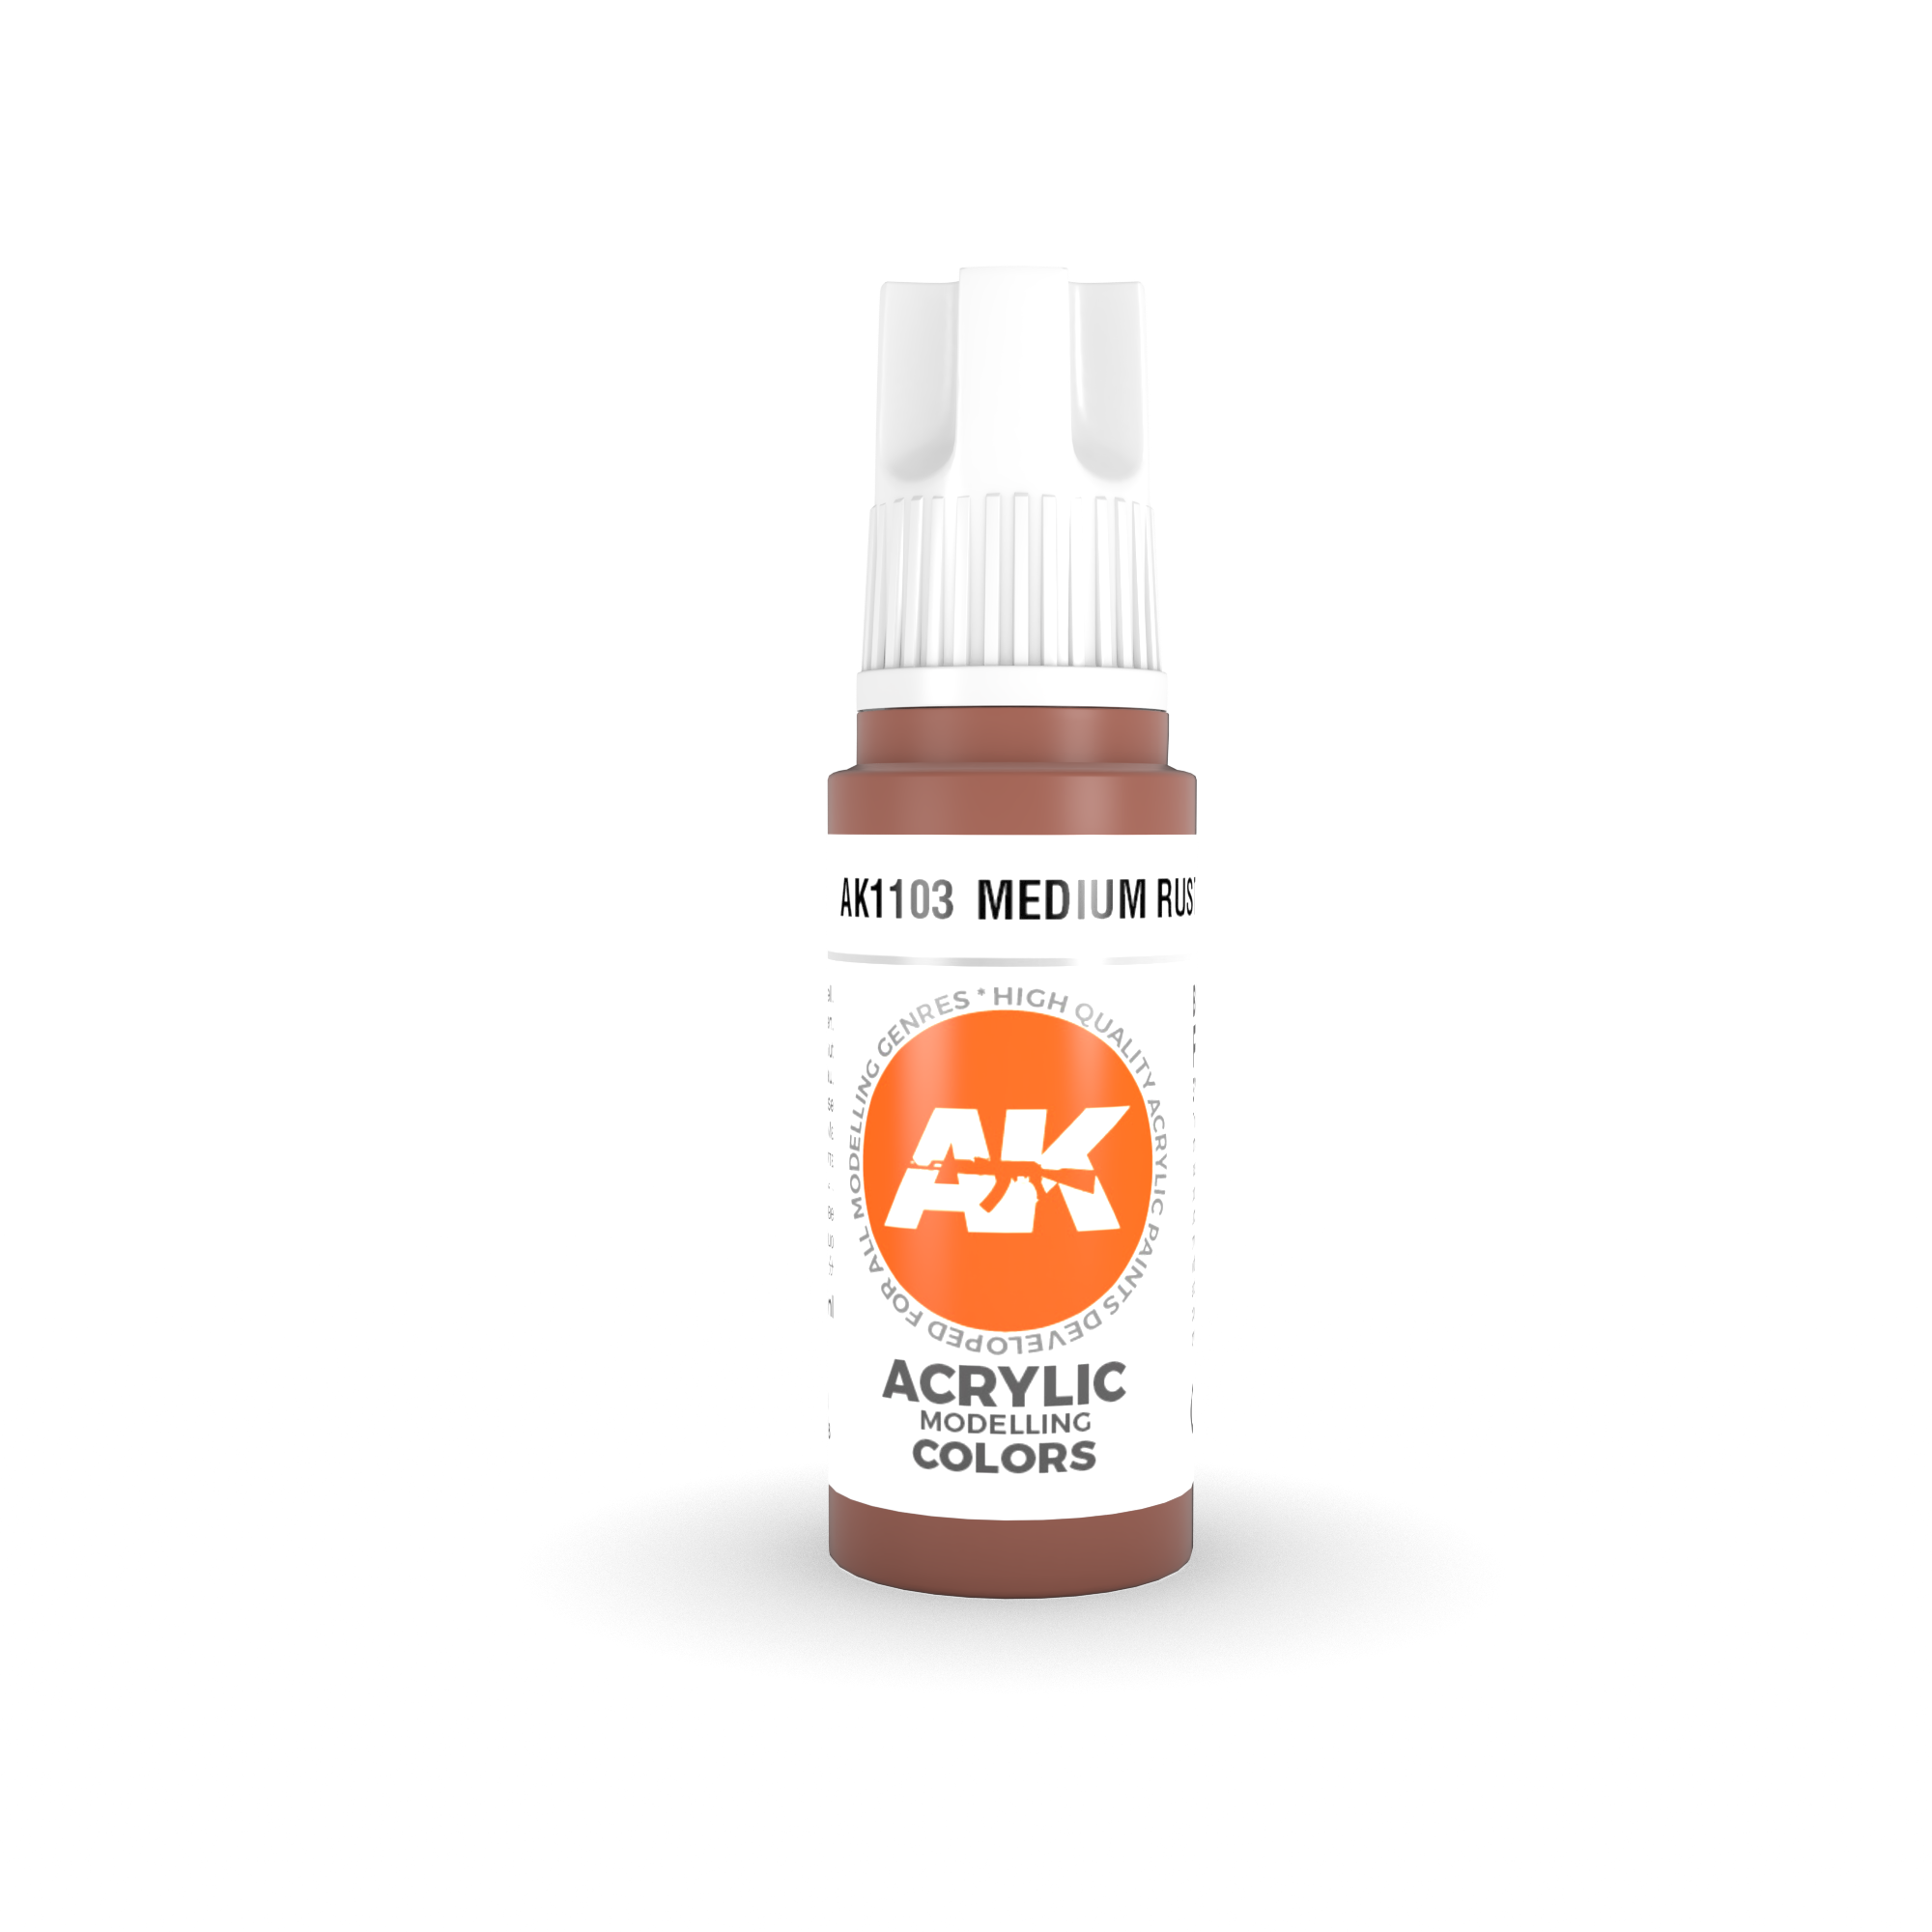 AK-Interactive Medium Rust Acrylic Modelling Color - 17ml - AK-11103